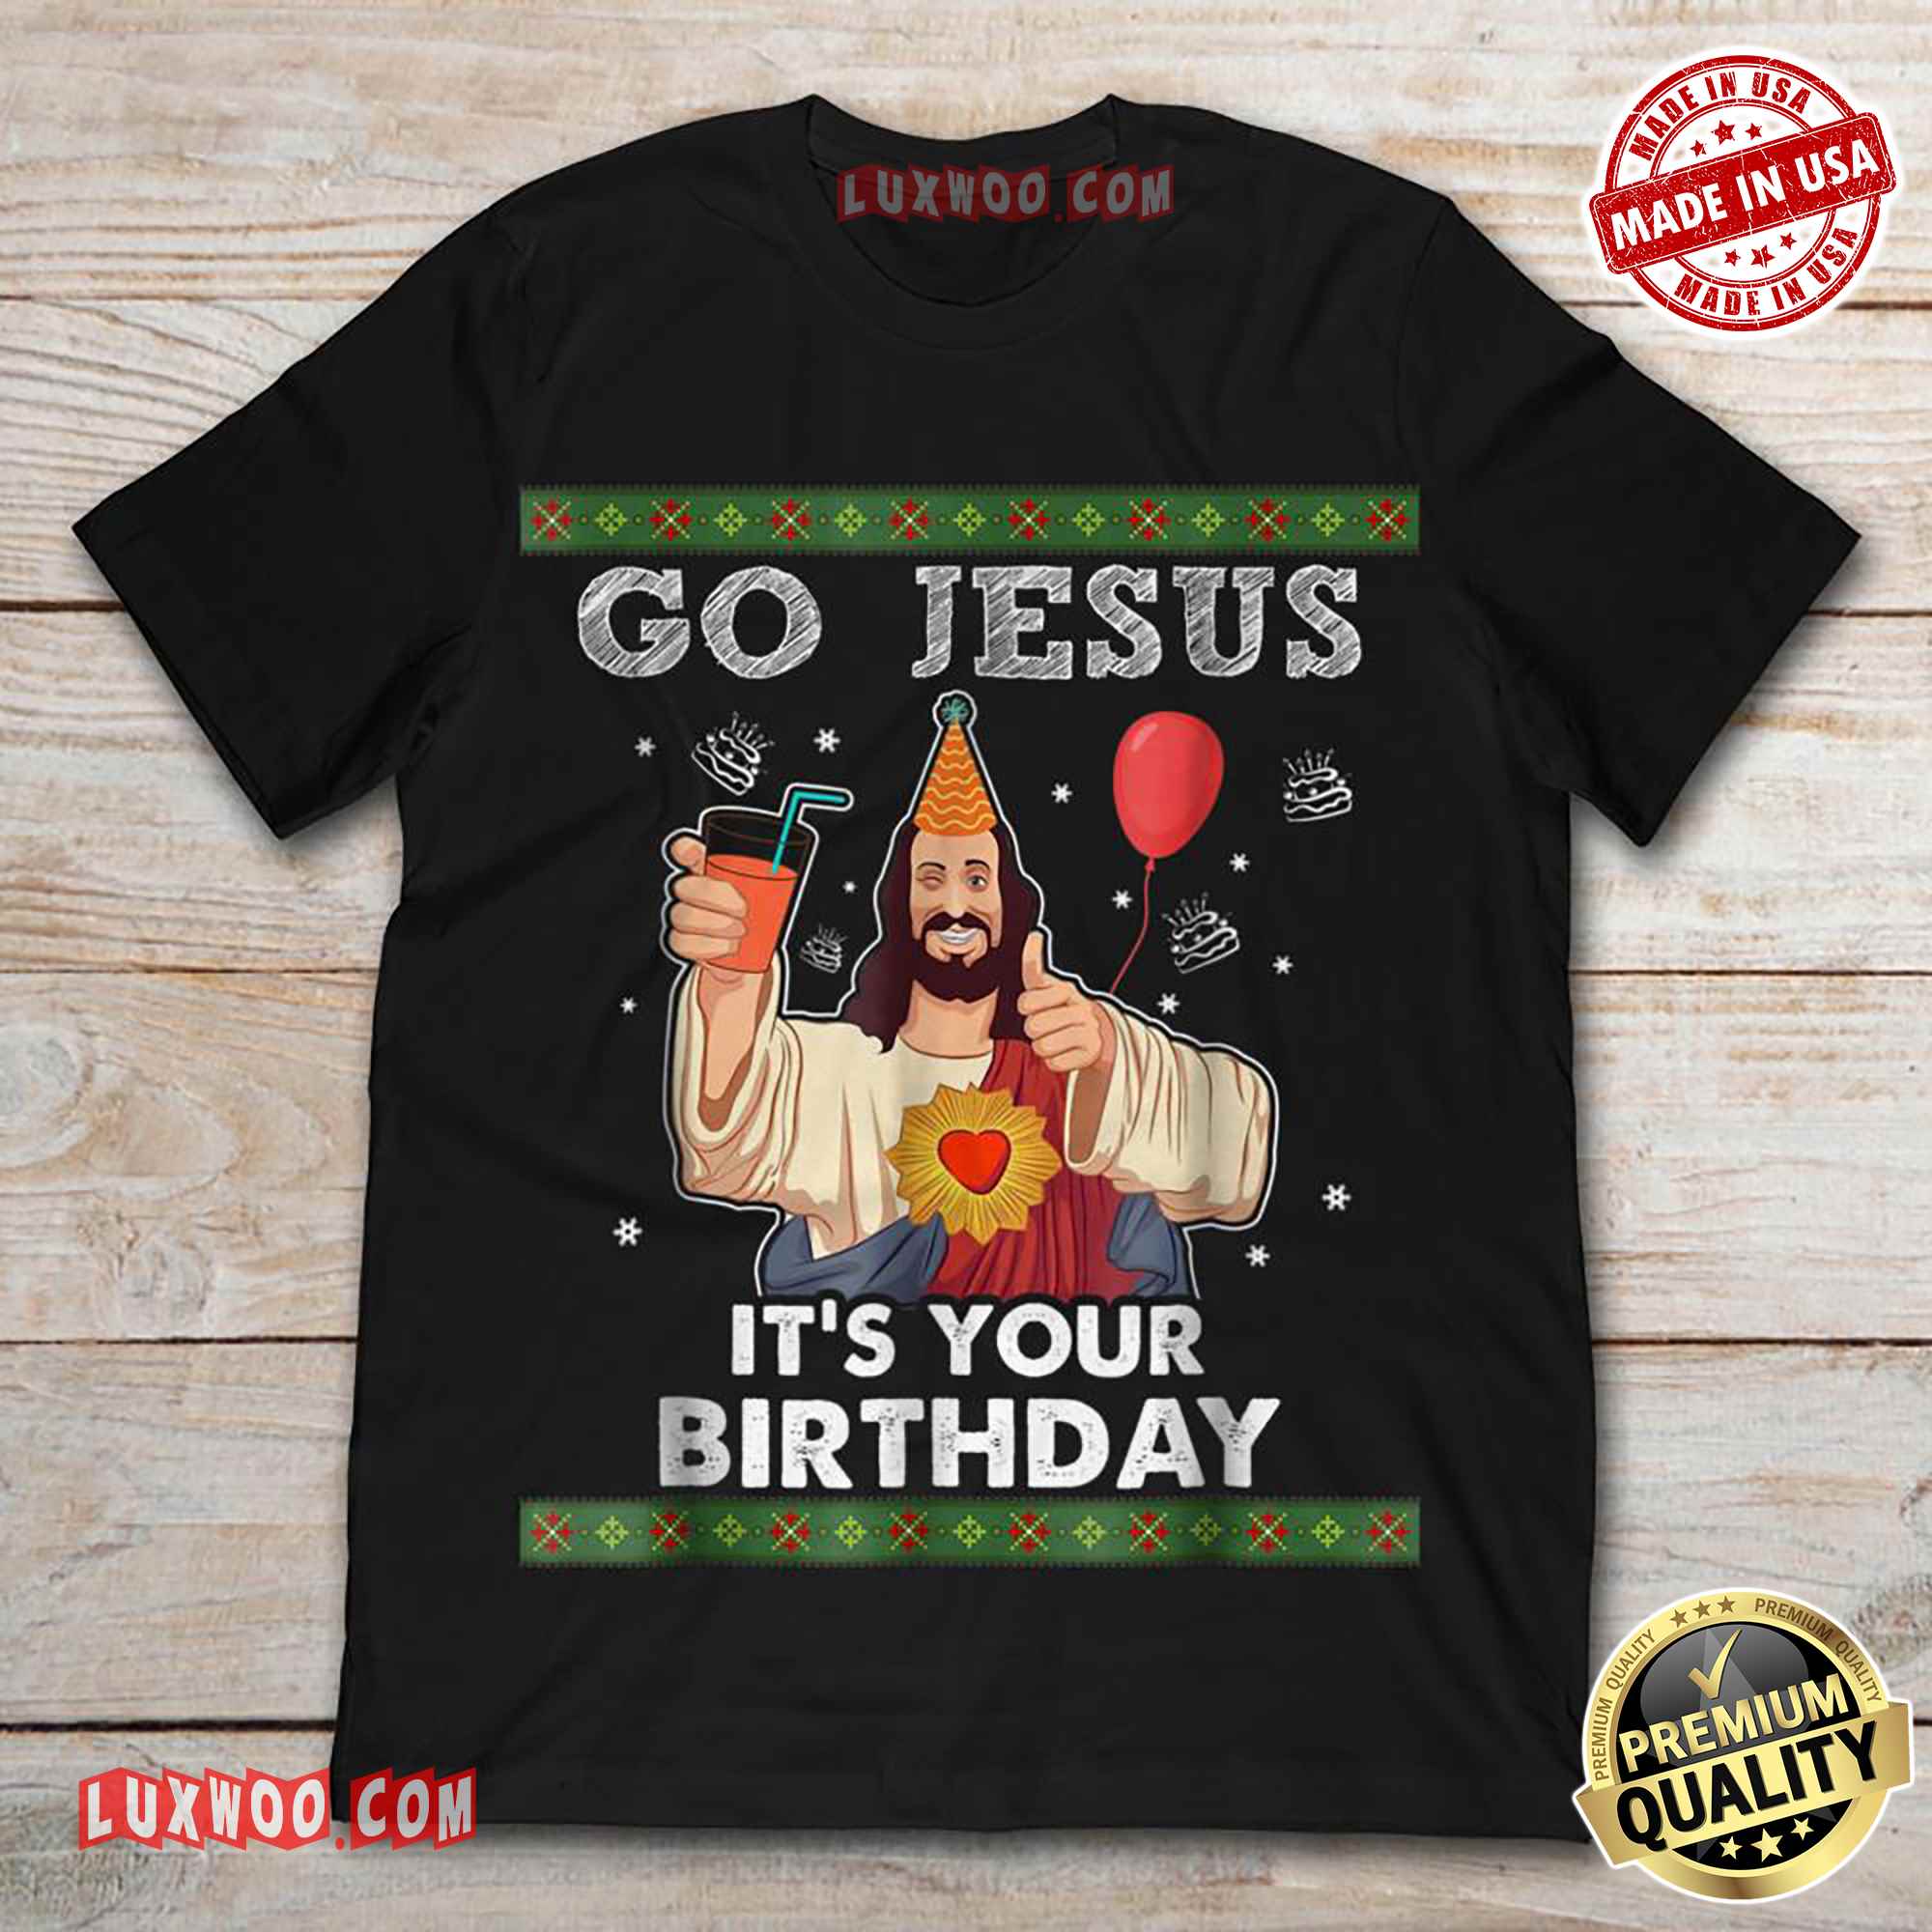 Go Jesus Its Your Birthday Shirt